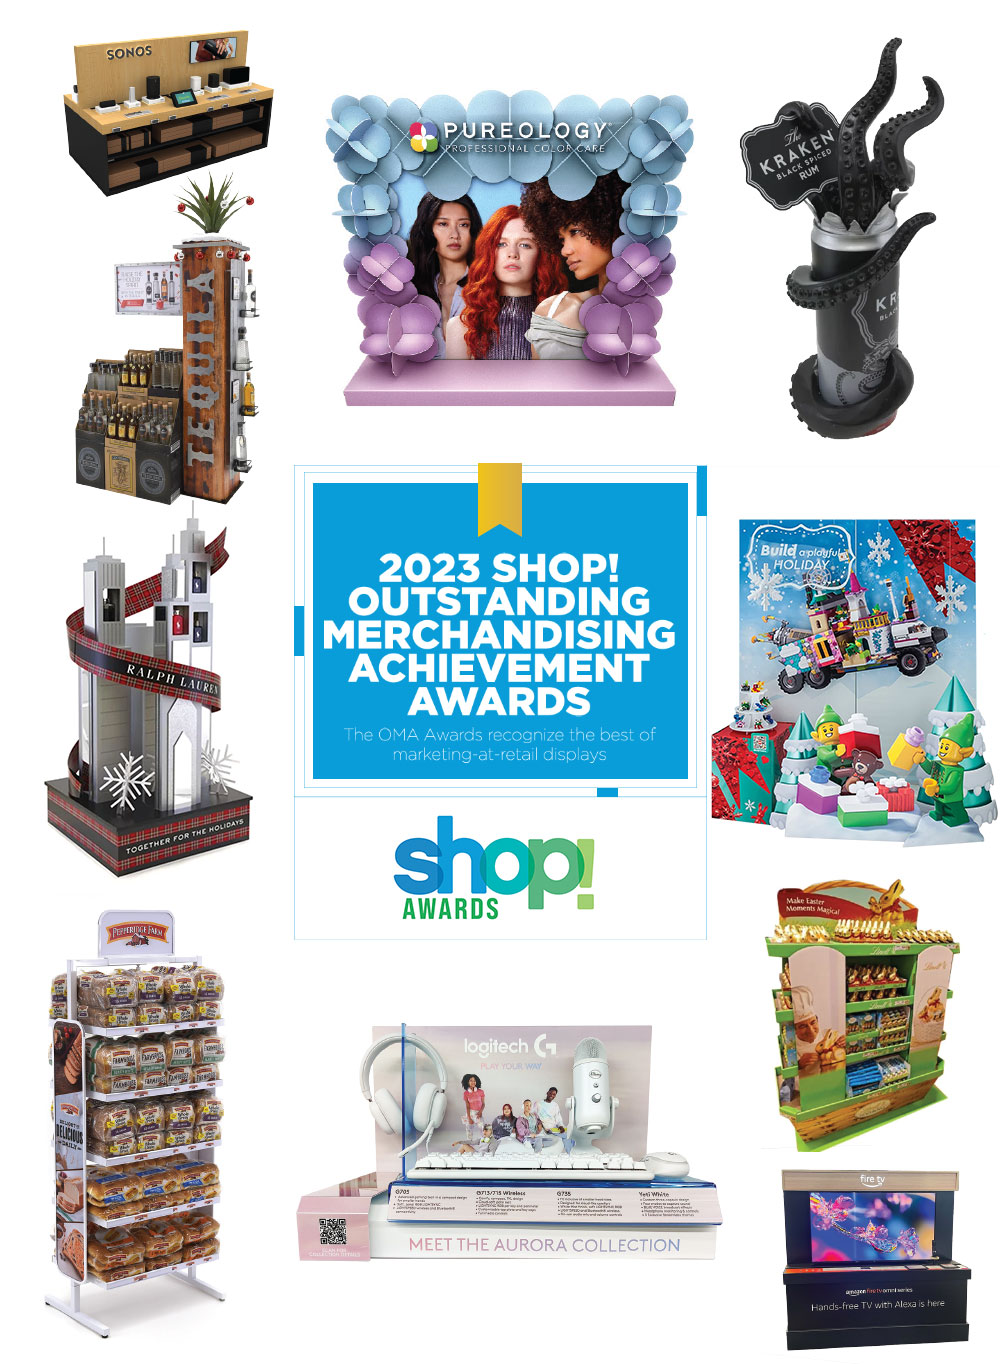 2023 Shop! Outstanding Merchandising Achievement Awards